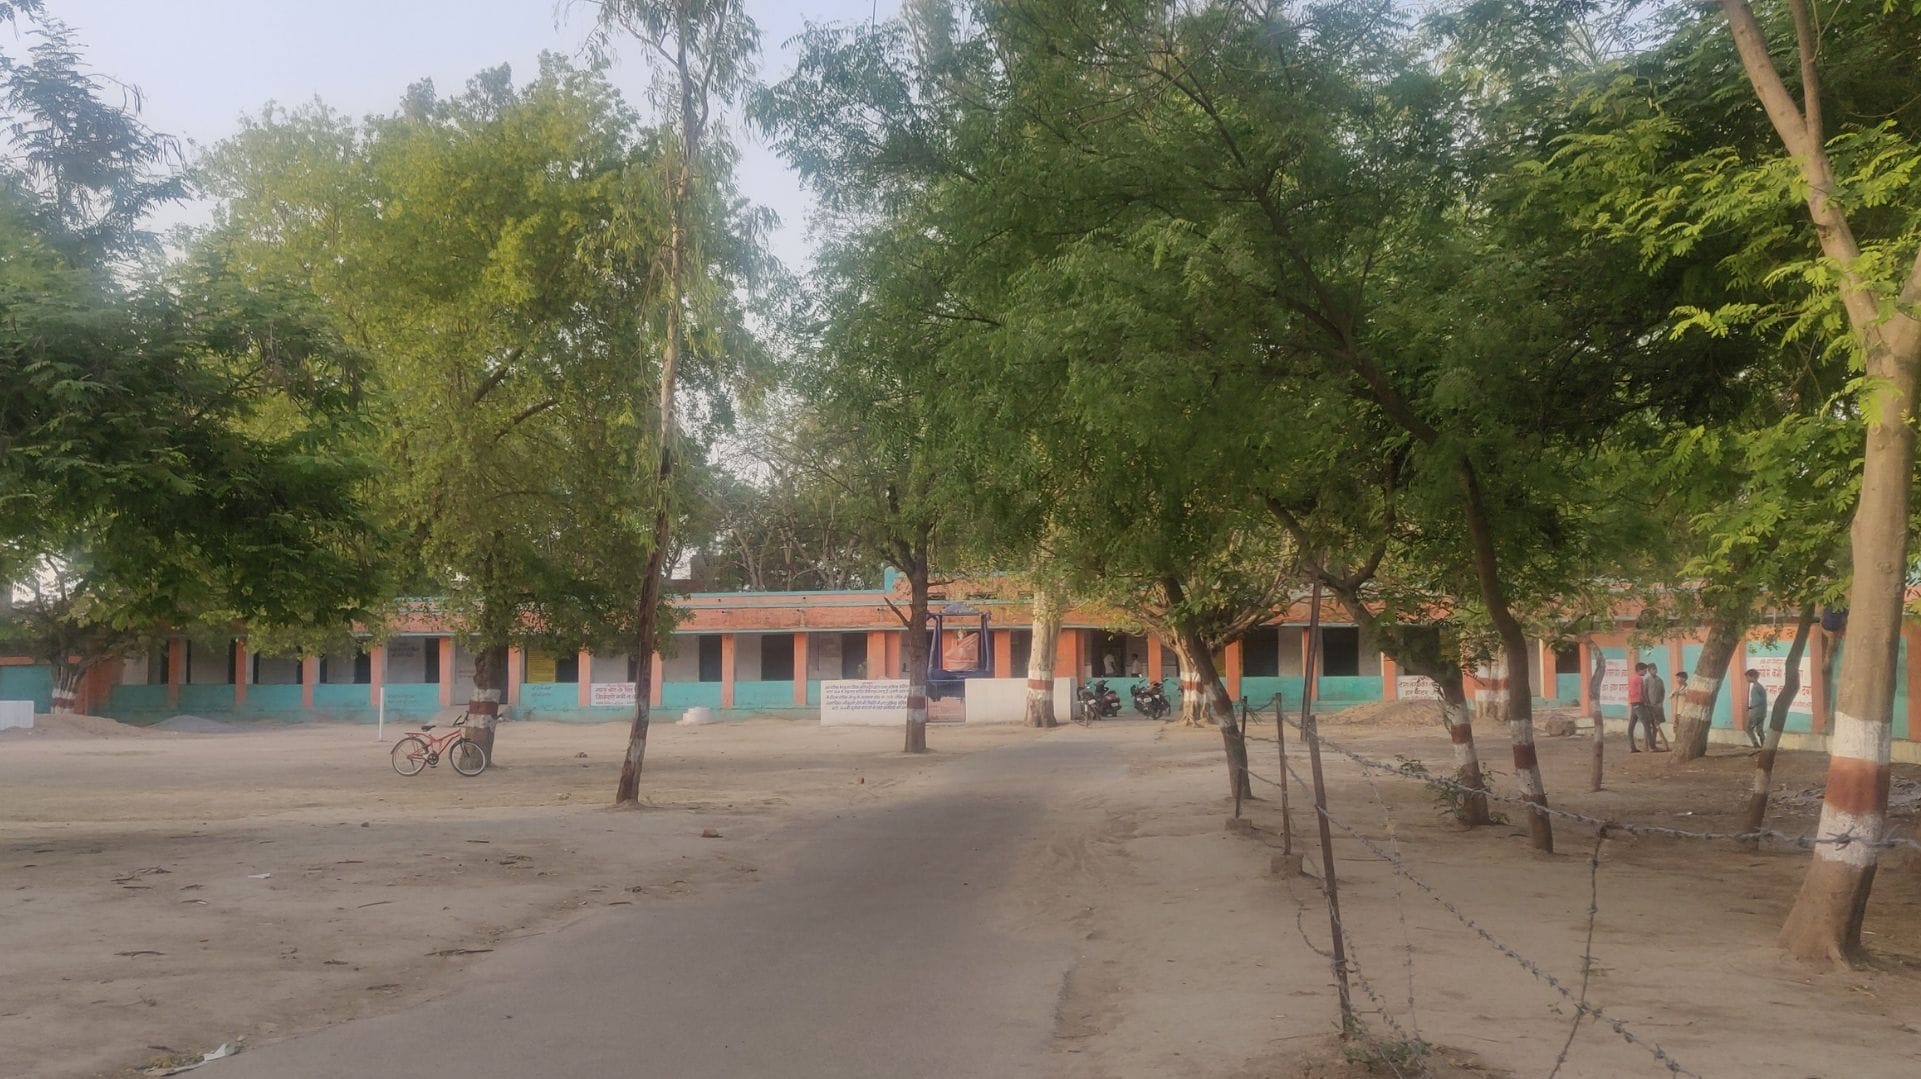 11. Government Girls High School, Lahar where Pragya did her schooling